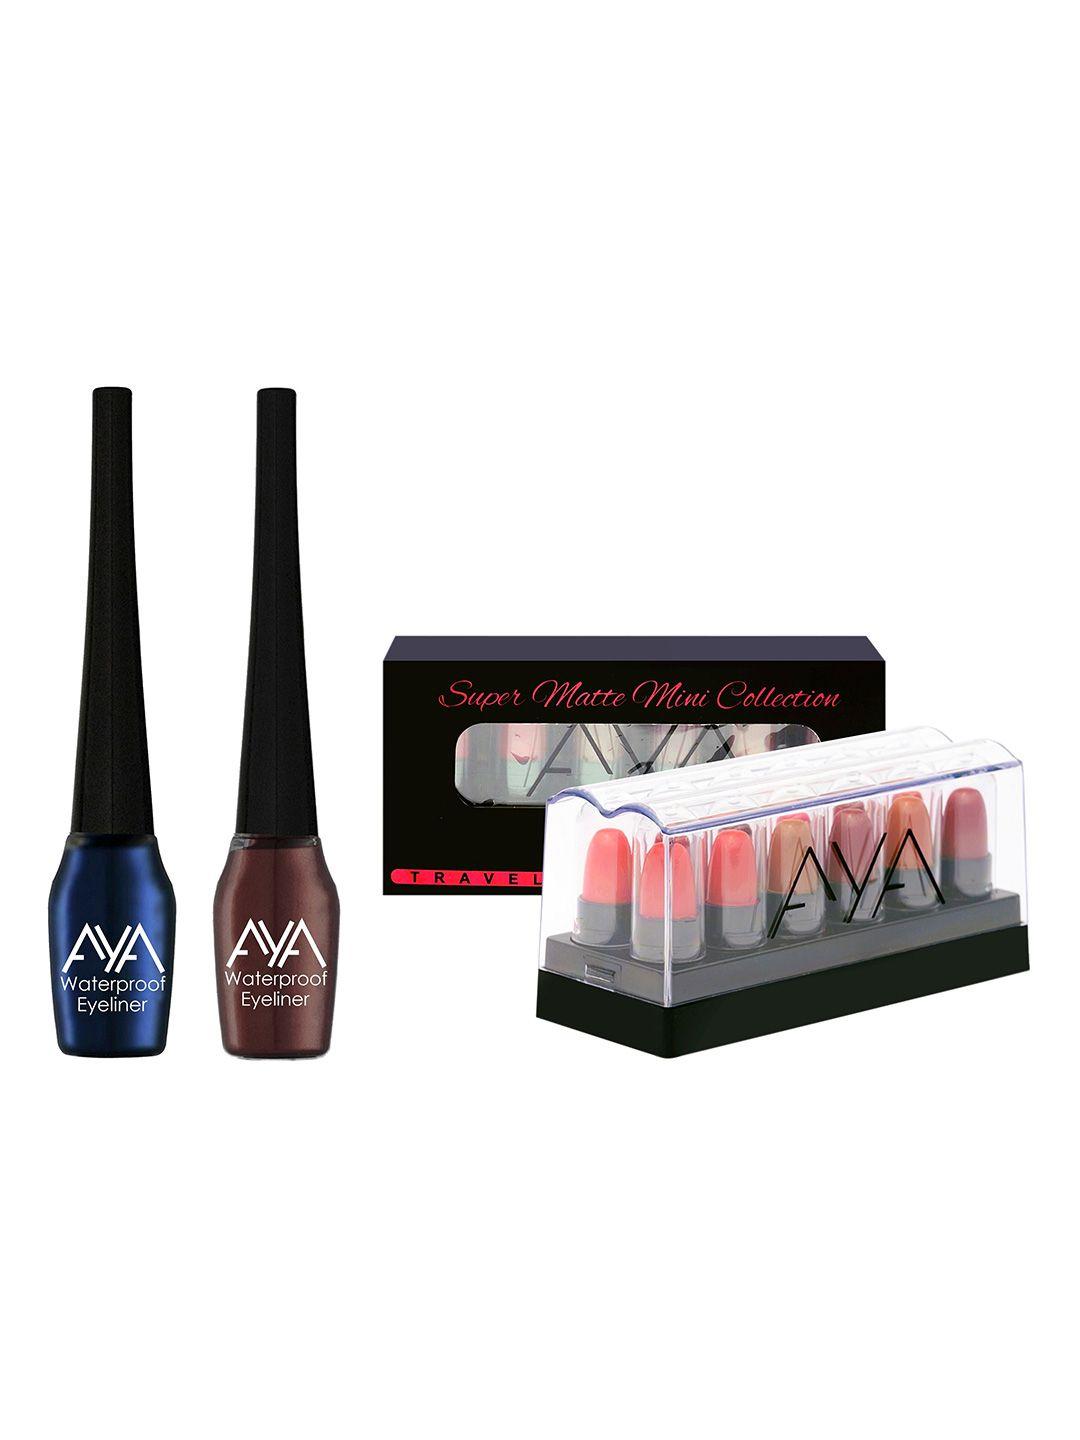 aya set of 2 waterproof eyeliner & set of 12 mini super matte lipstick - blue & brown